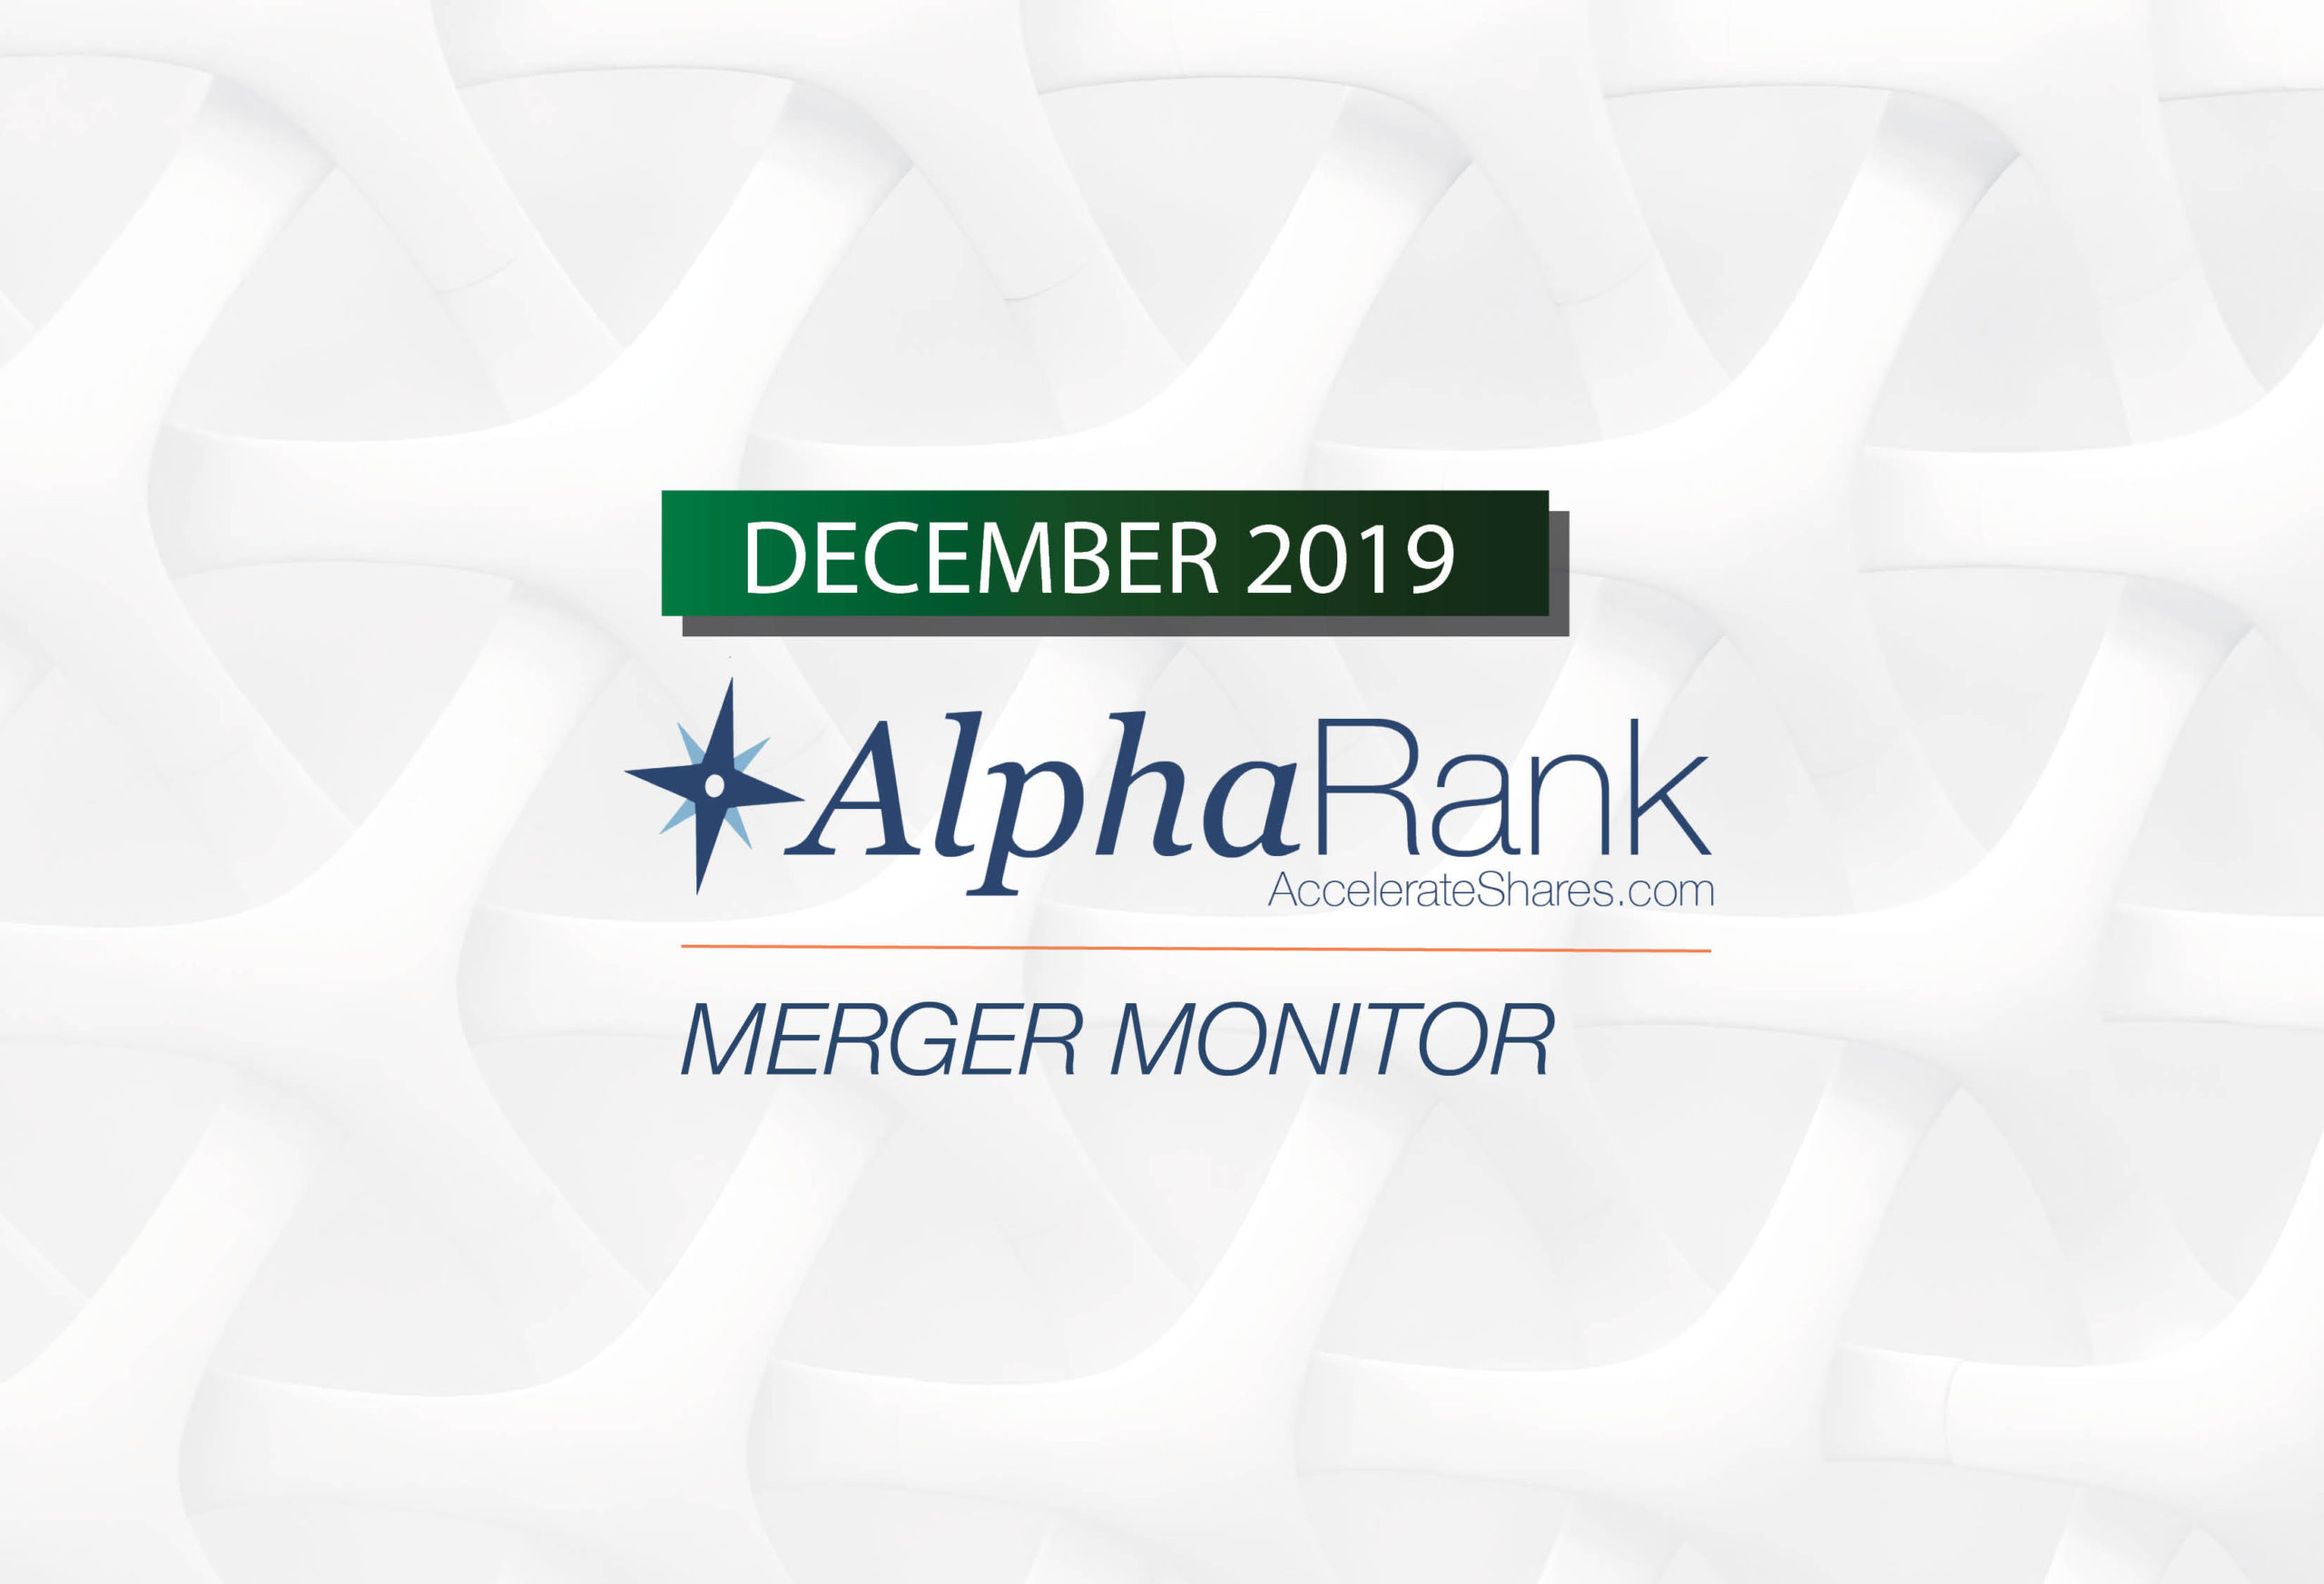 AlphaRank Merger Monitor—December 2019